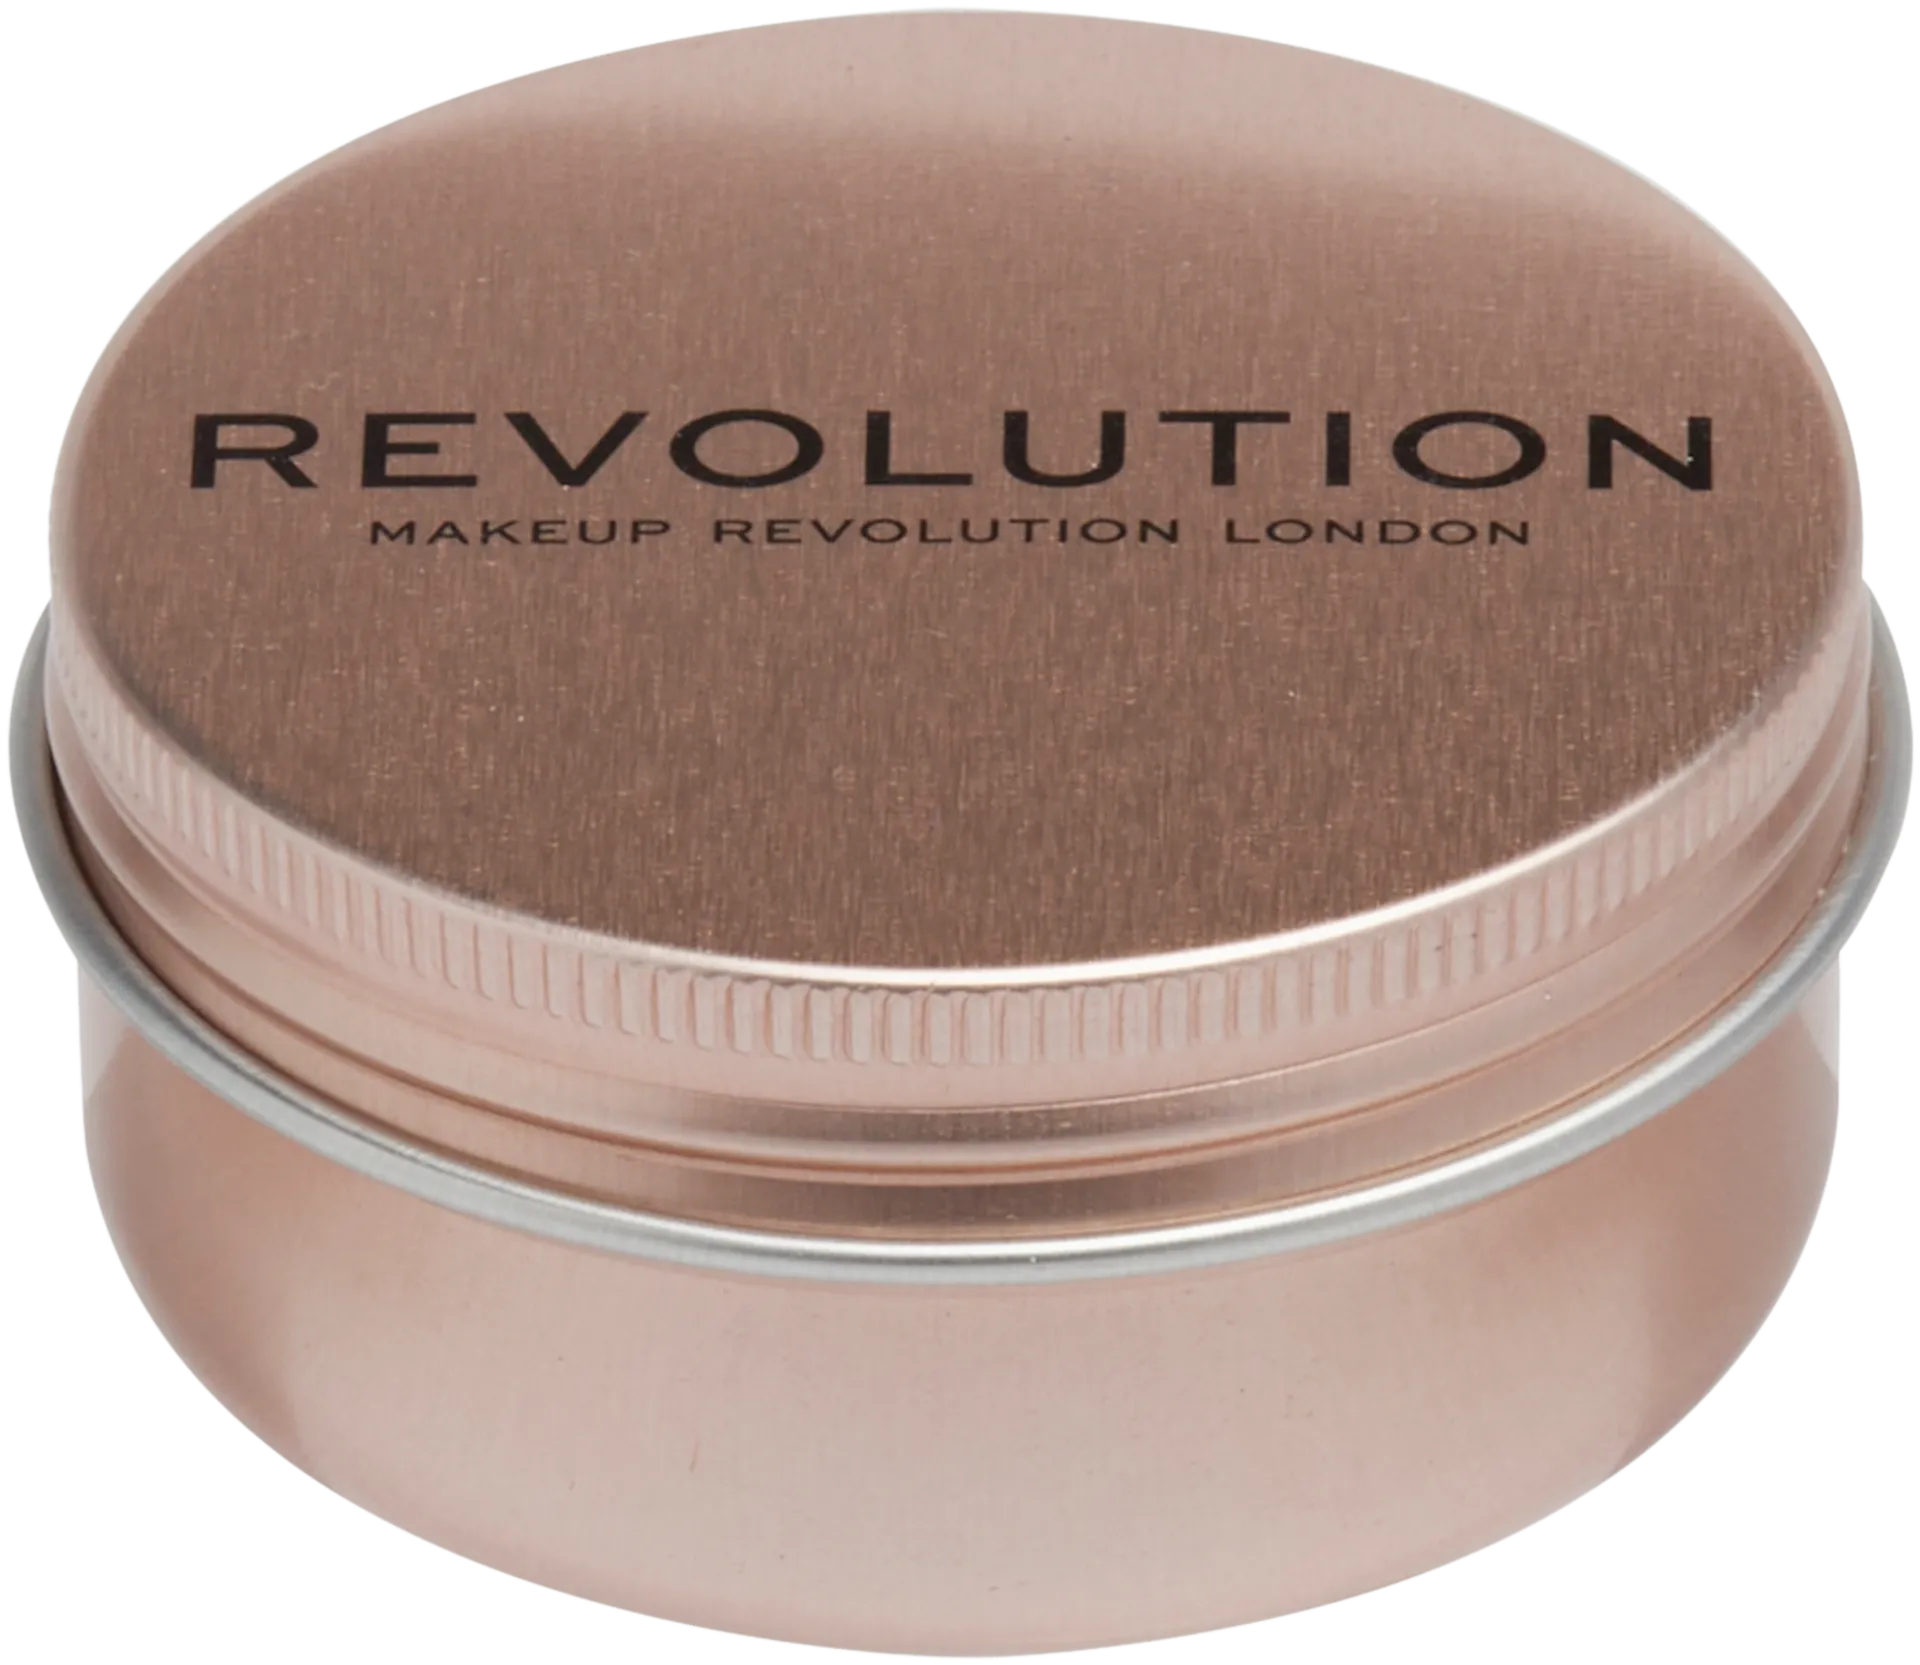 Makeup Revolution Balm Glow Peach Bliss monikäyttömeikkivoide 32g - Peach Bliss - 2